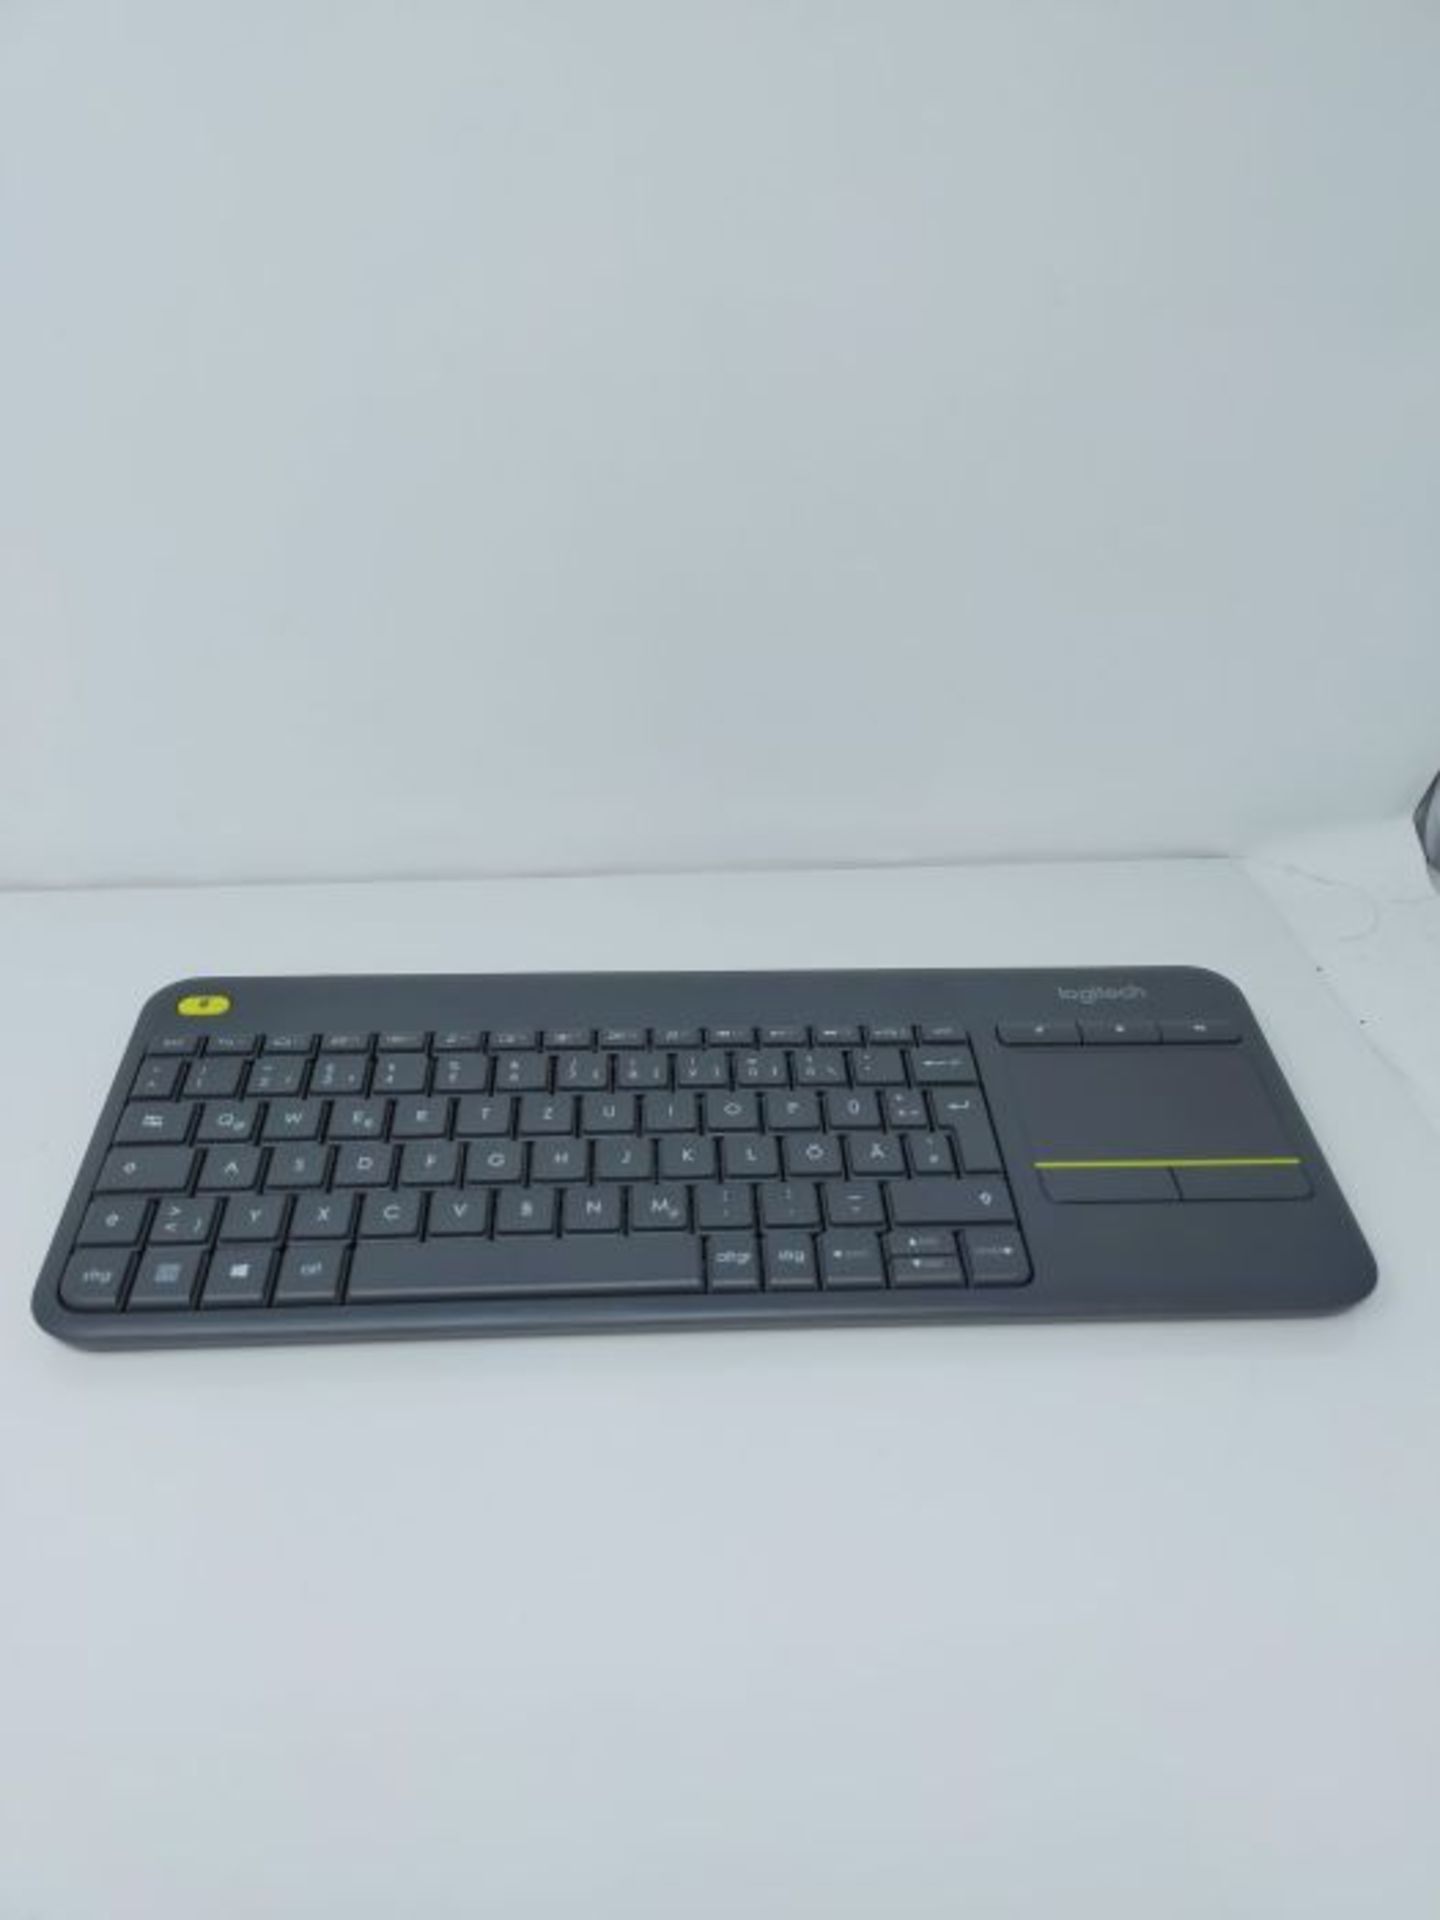 Logitech K400 Plus Wireless Livingroom Keyboard, QWERTZ German Layout - Black - Image 2 of 2